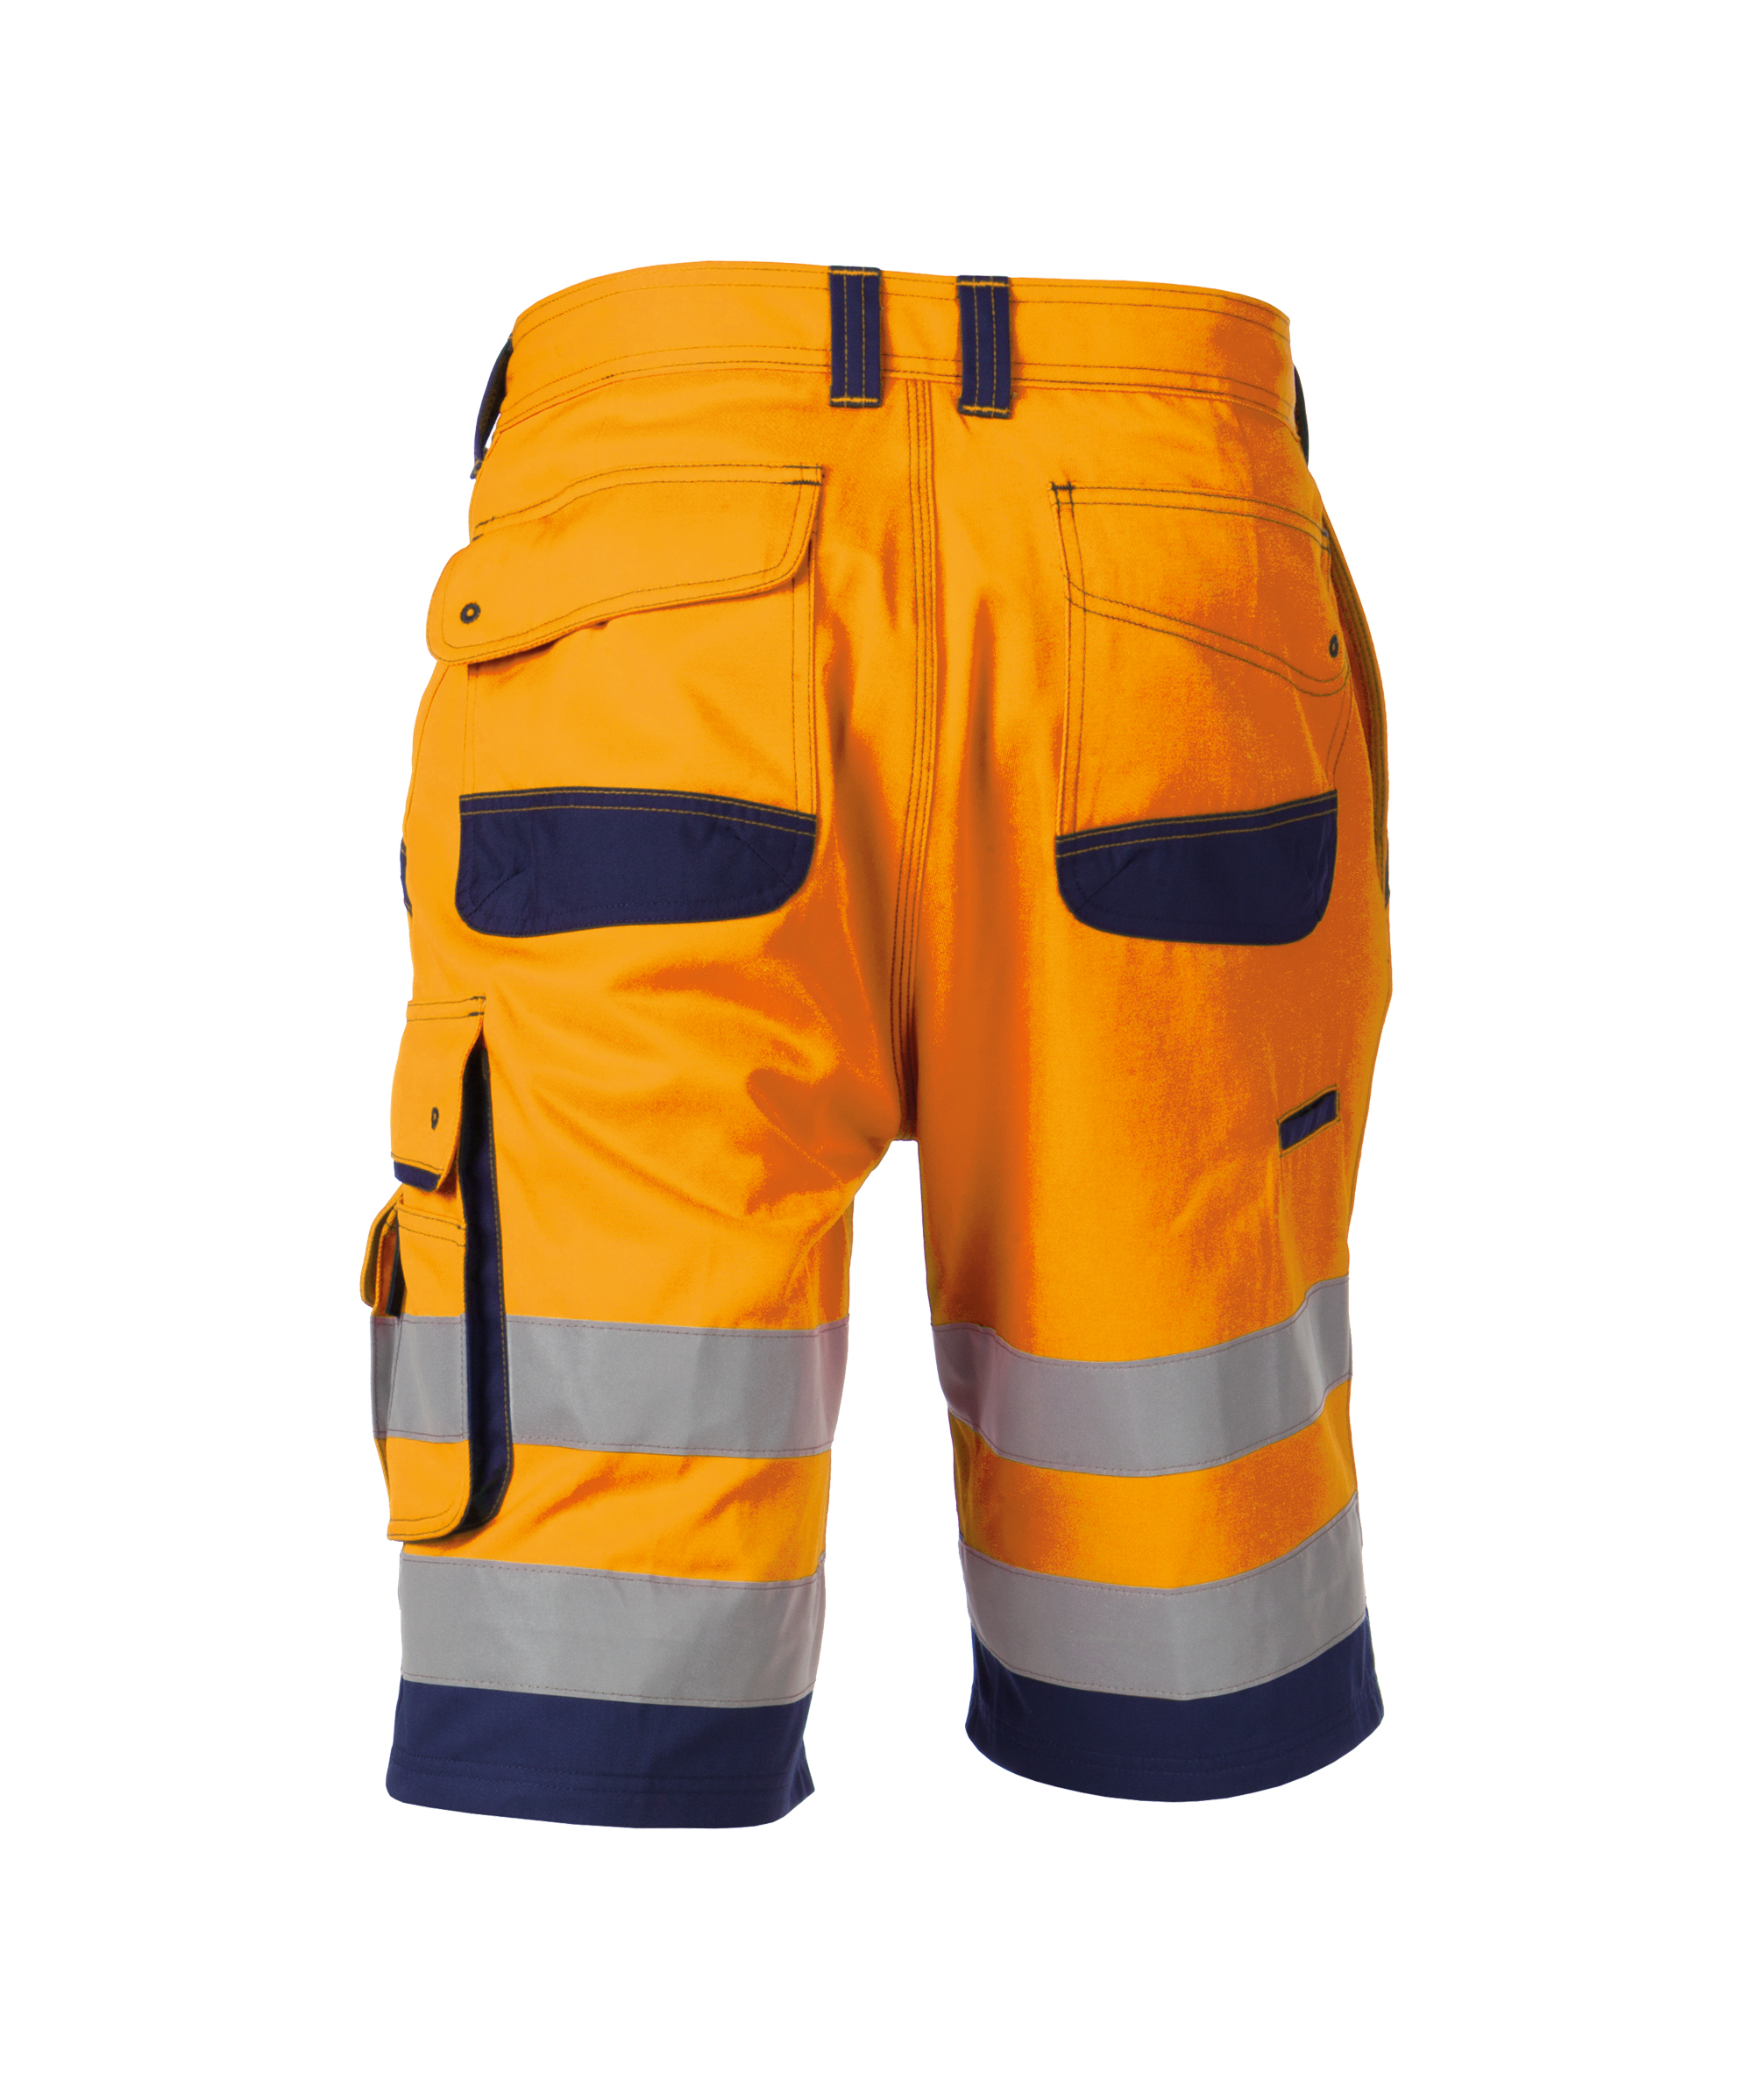 lucca_high-visibility-work-shorts_fluo-orange-navy_back.jpg